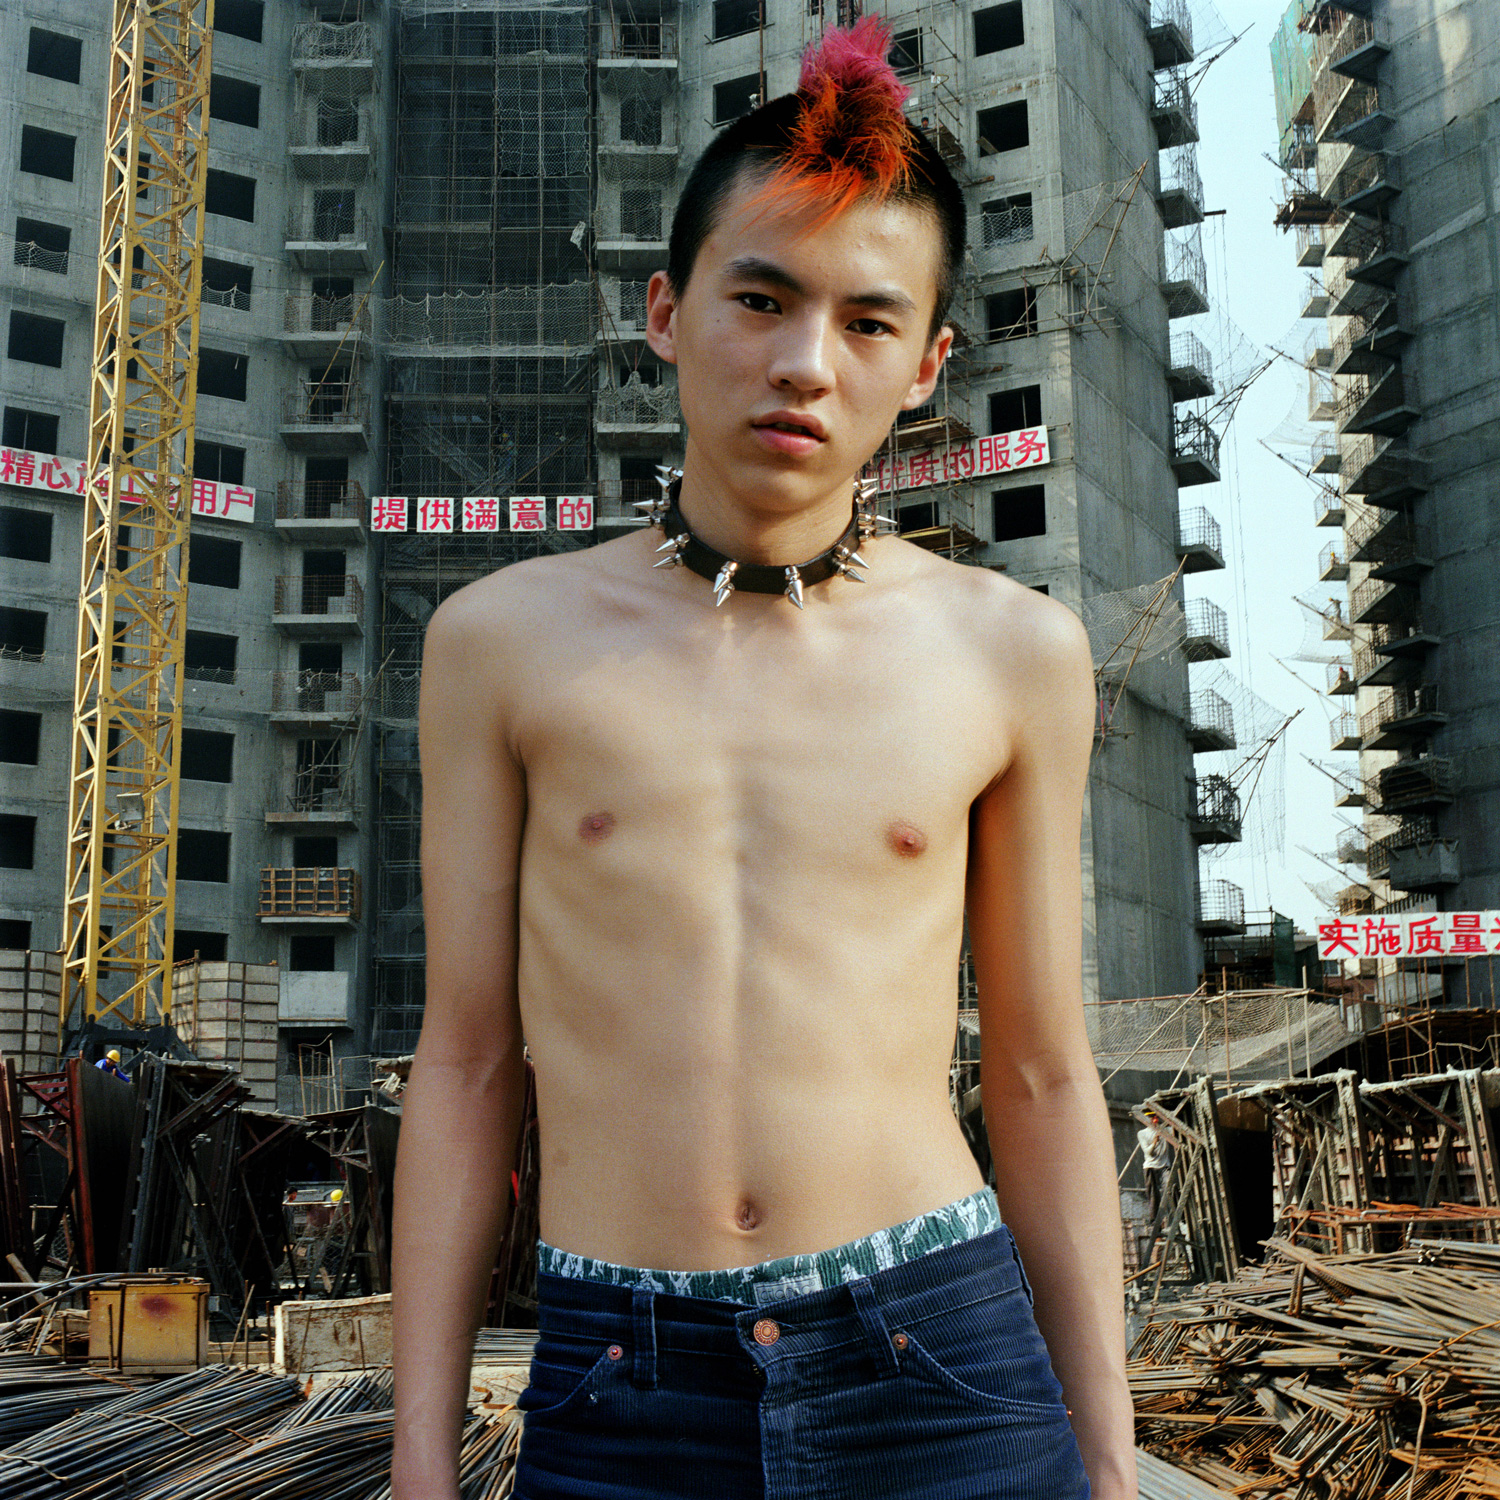 Beijing Punks Anarchy Jerks singer Shen Yue